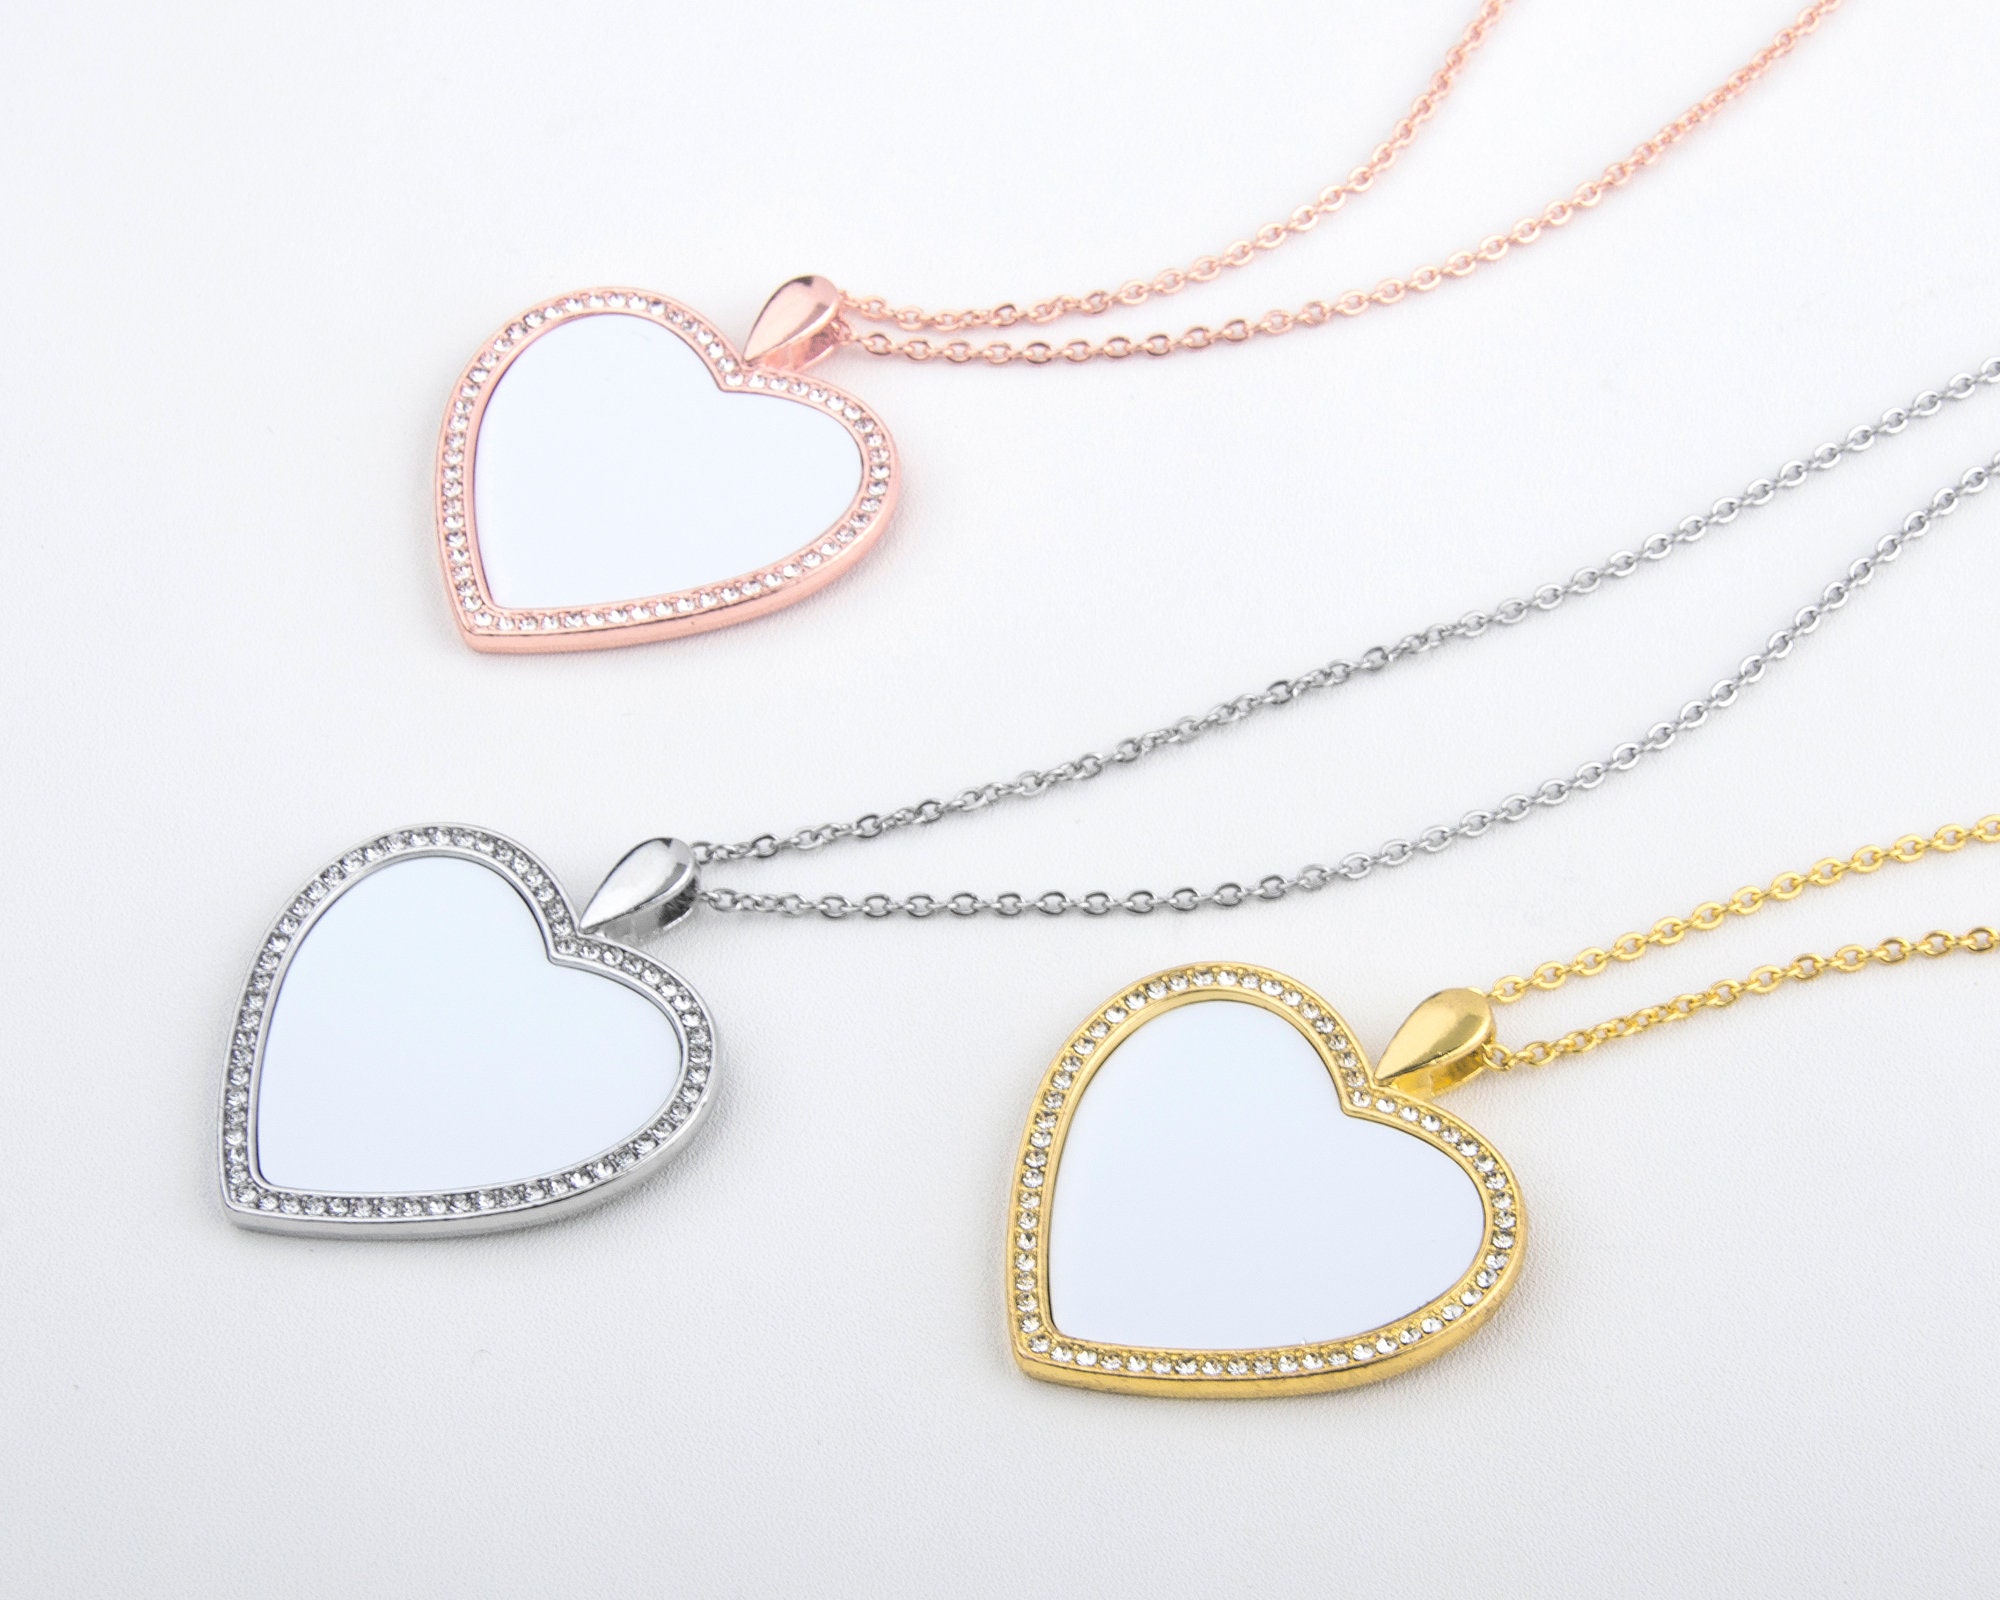 Sublimation Blank Heart Shape Necklace Pendants DIY Xmas Romantic Presents  Chain